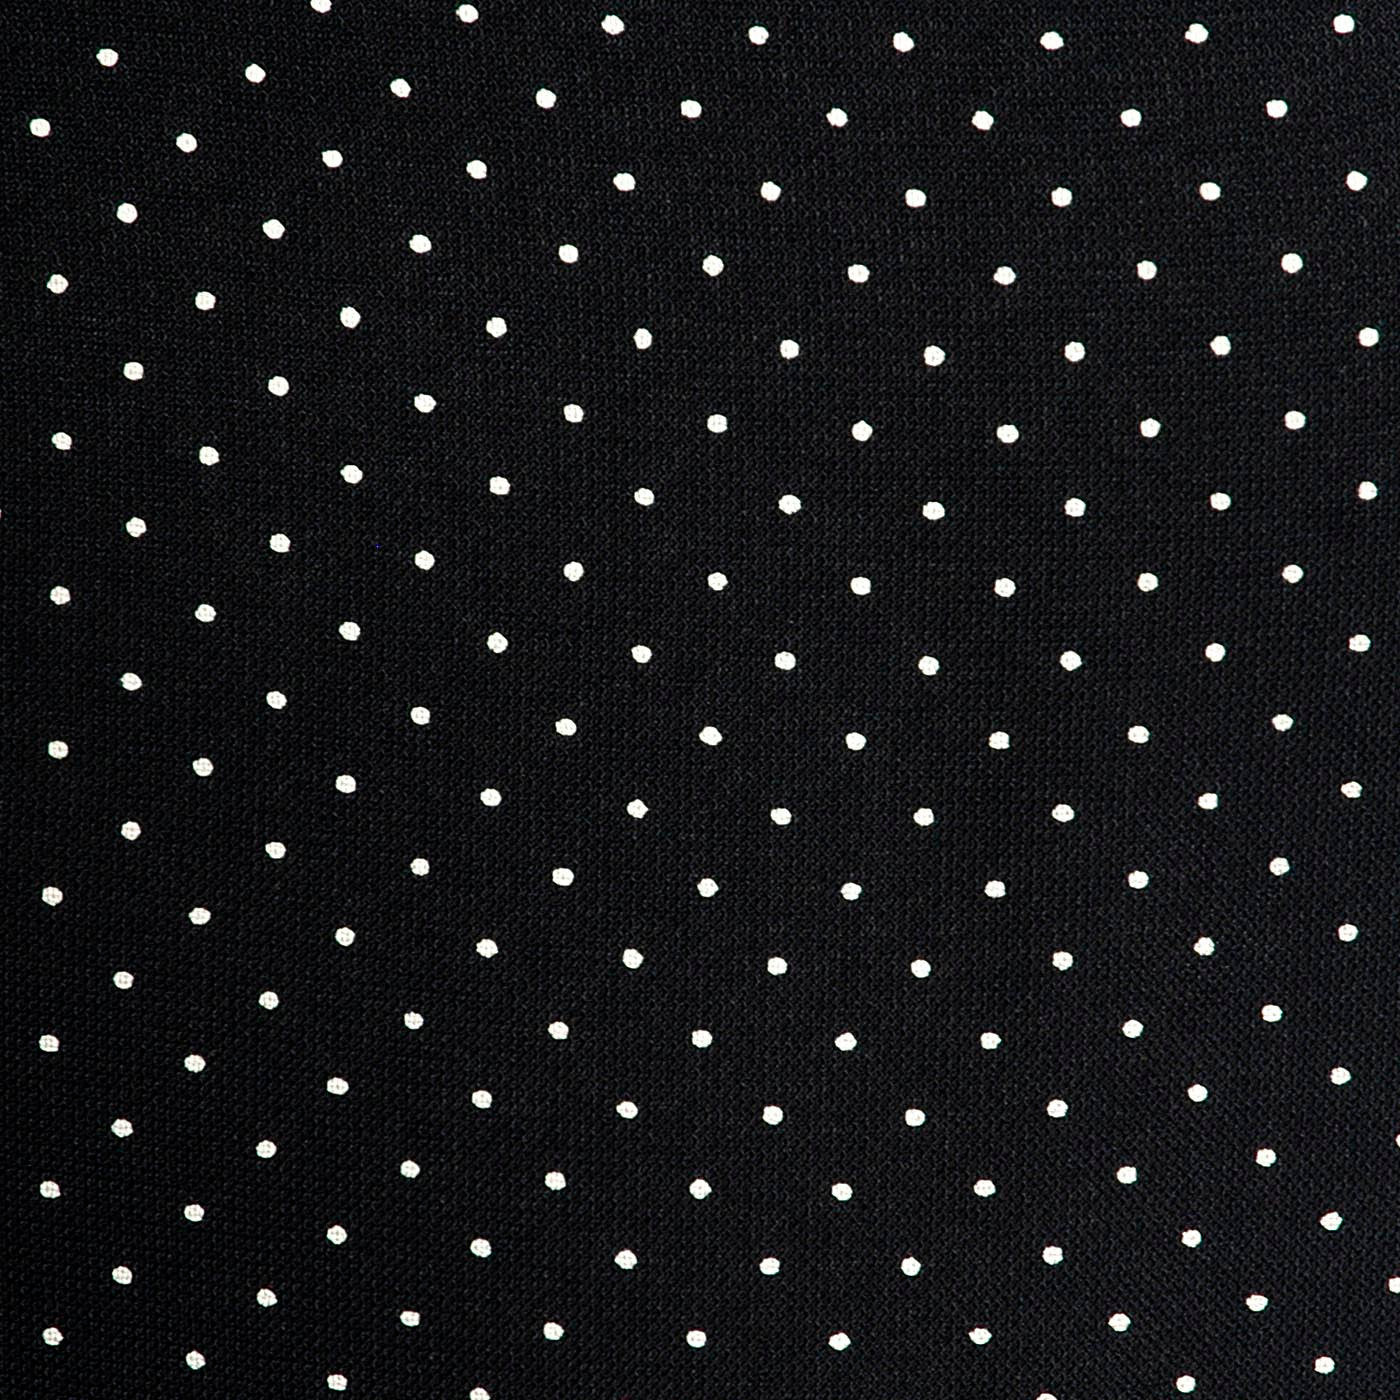 1950s Black Knit Dress with White Polka Dots